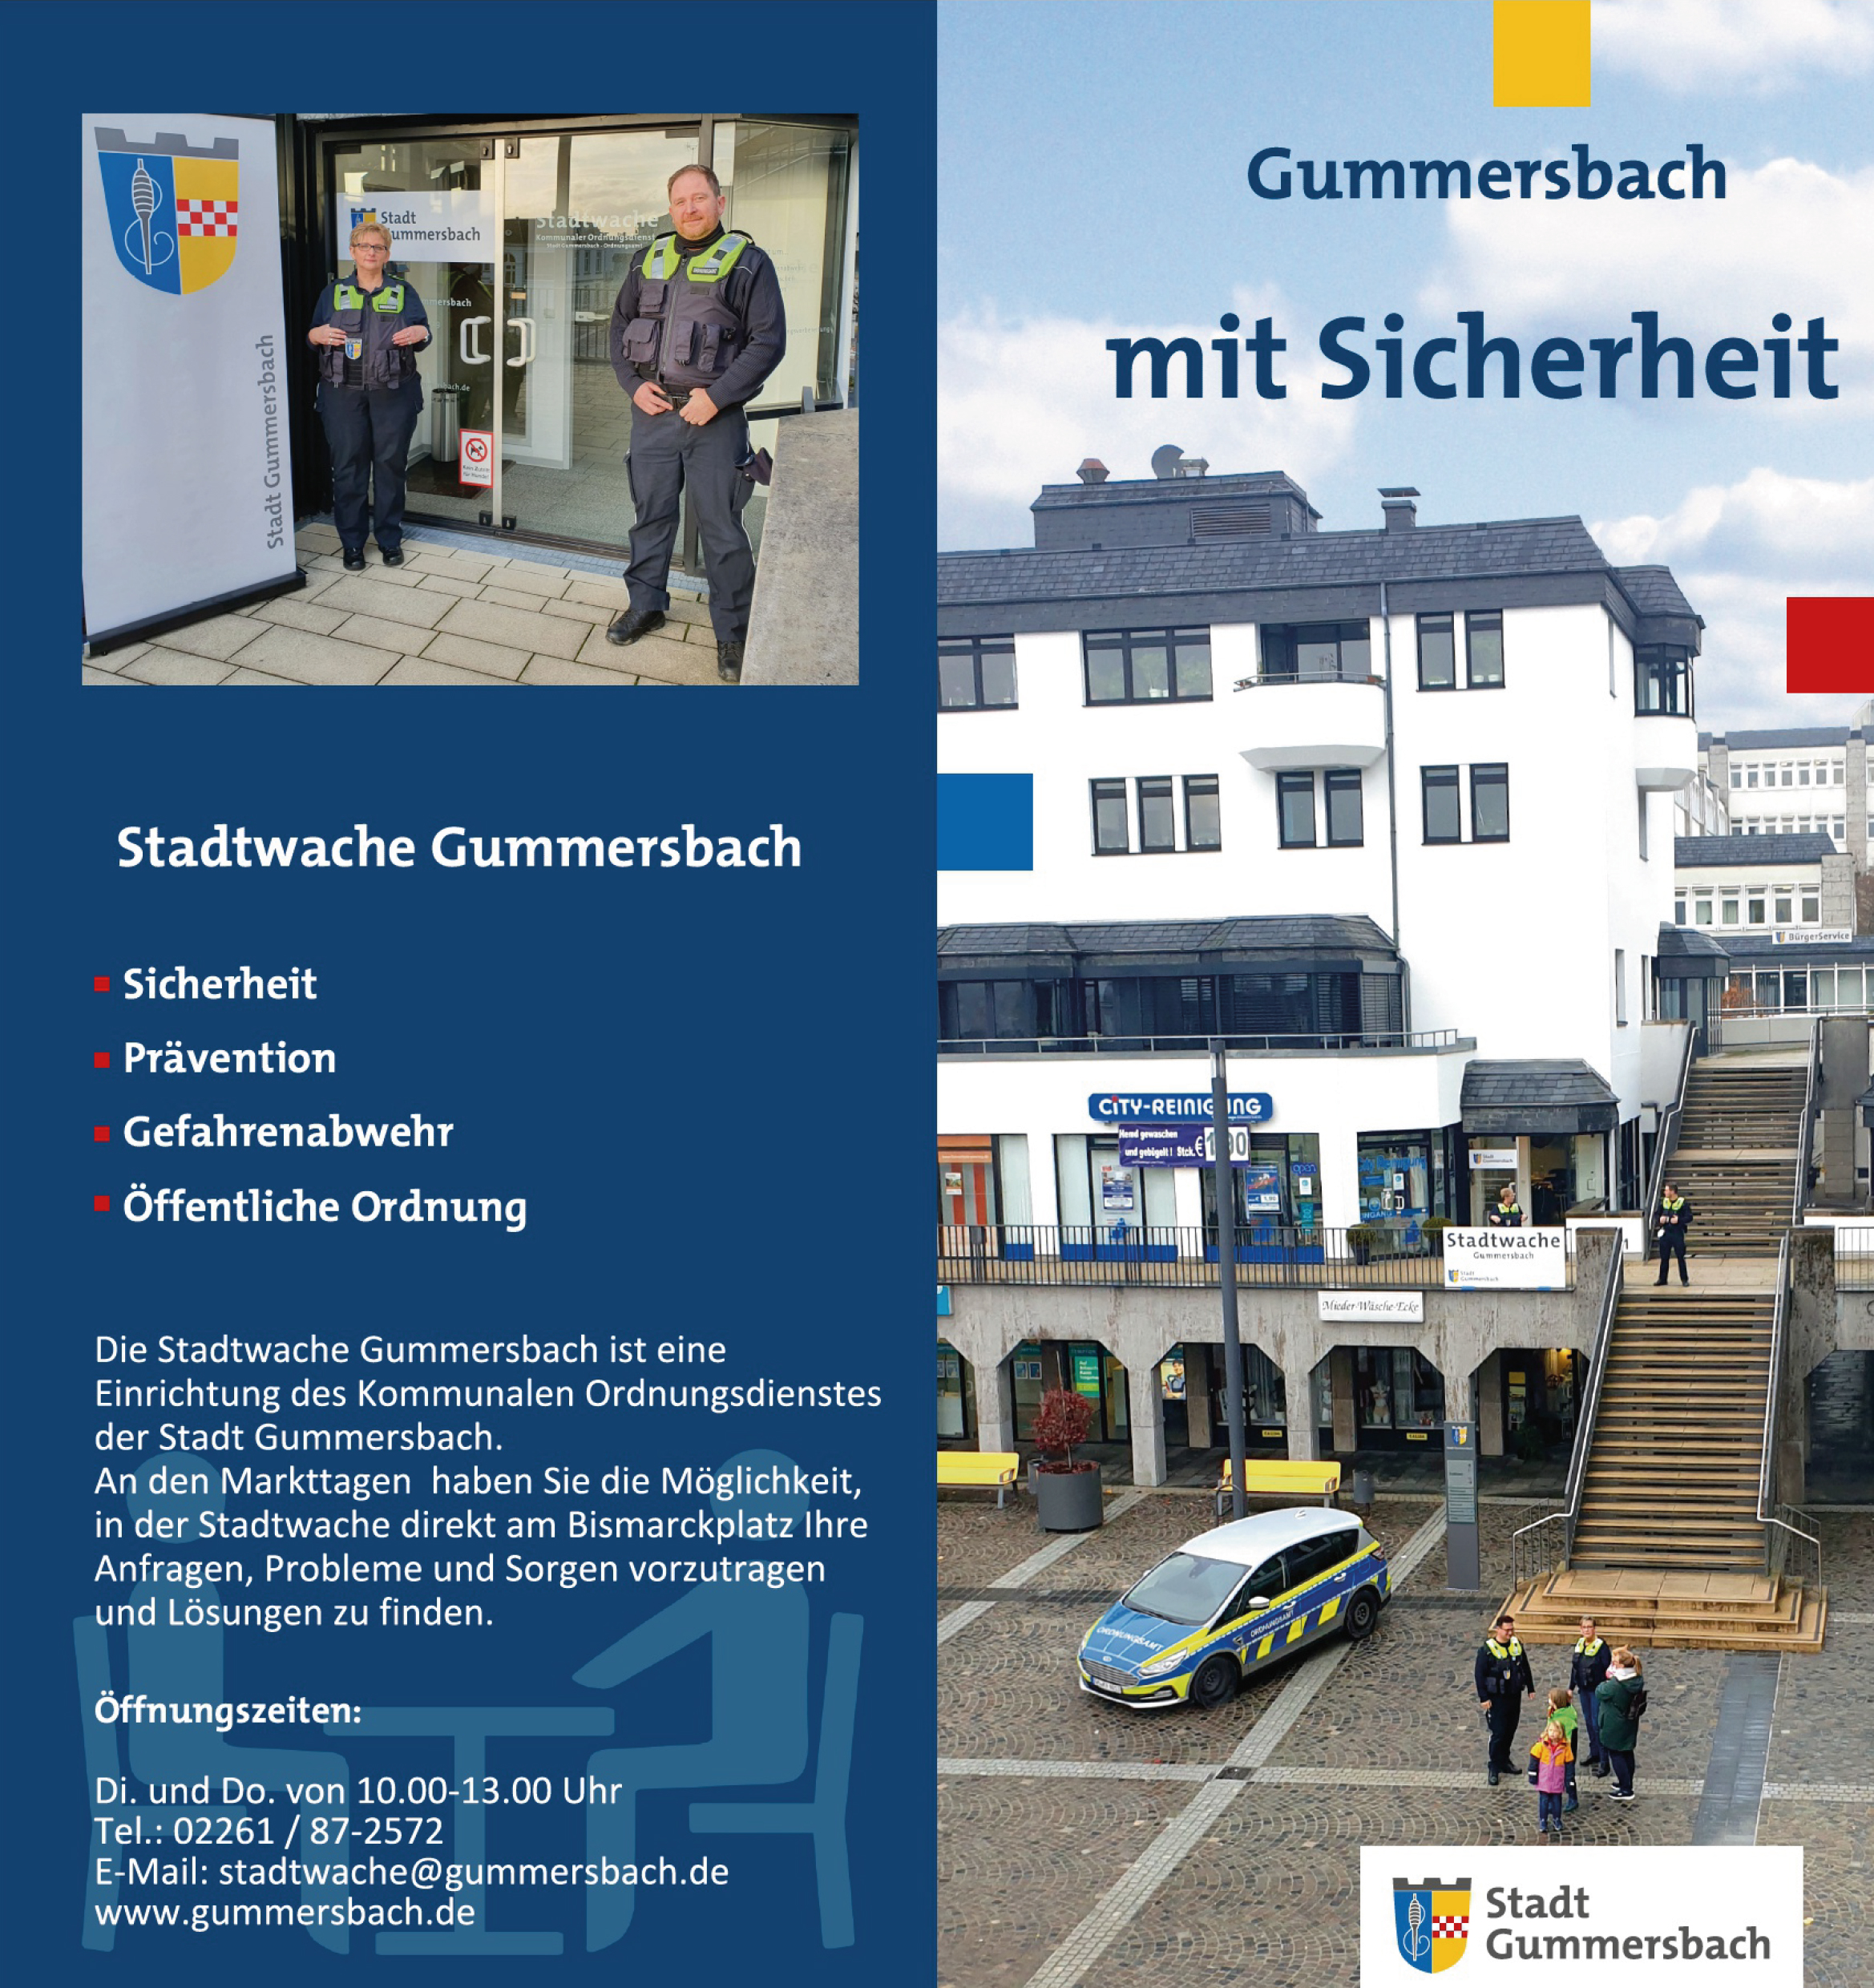 Stadt Gummersbach - Stadtwache